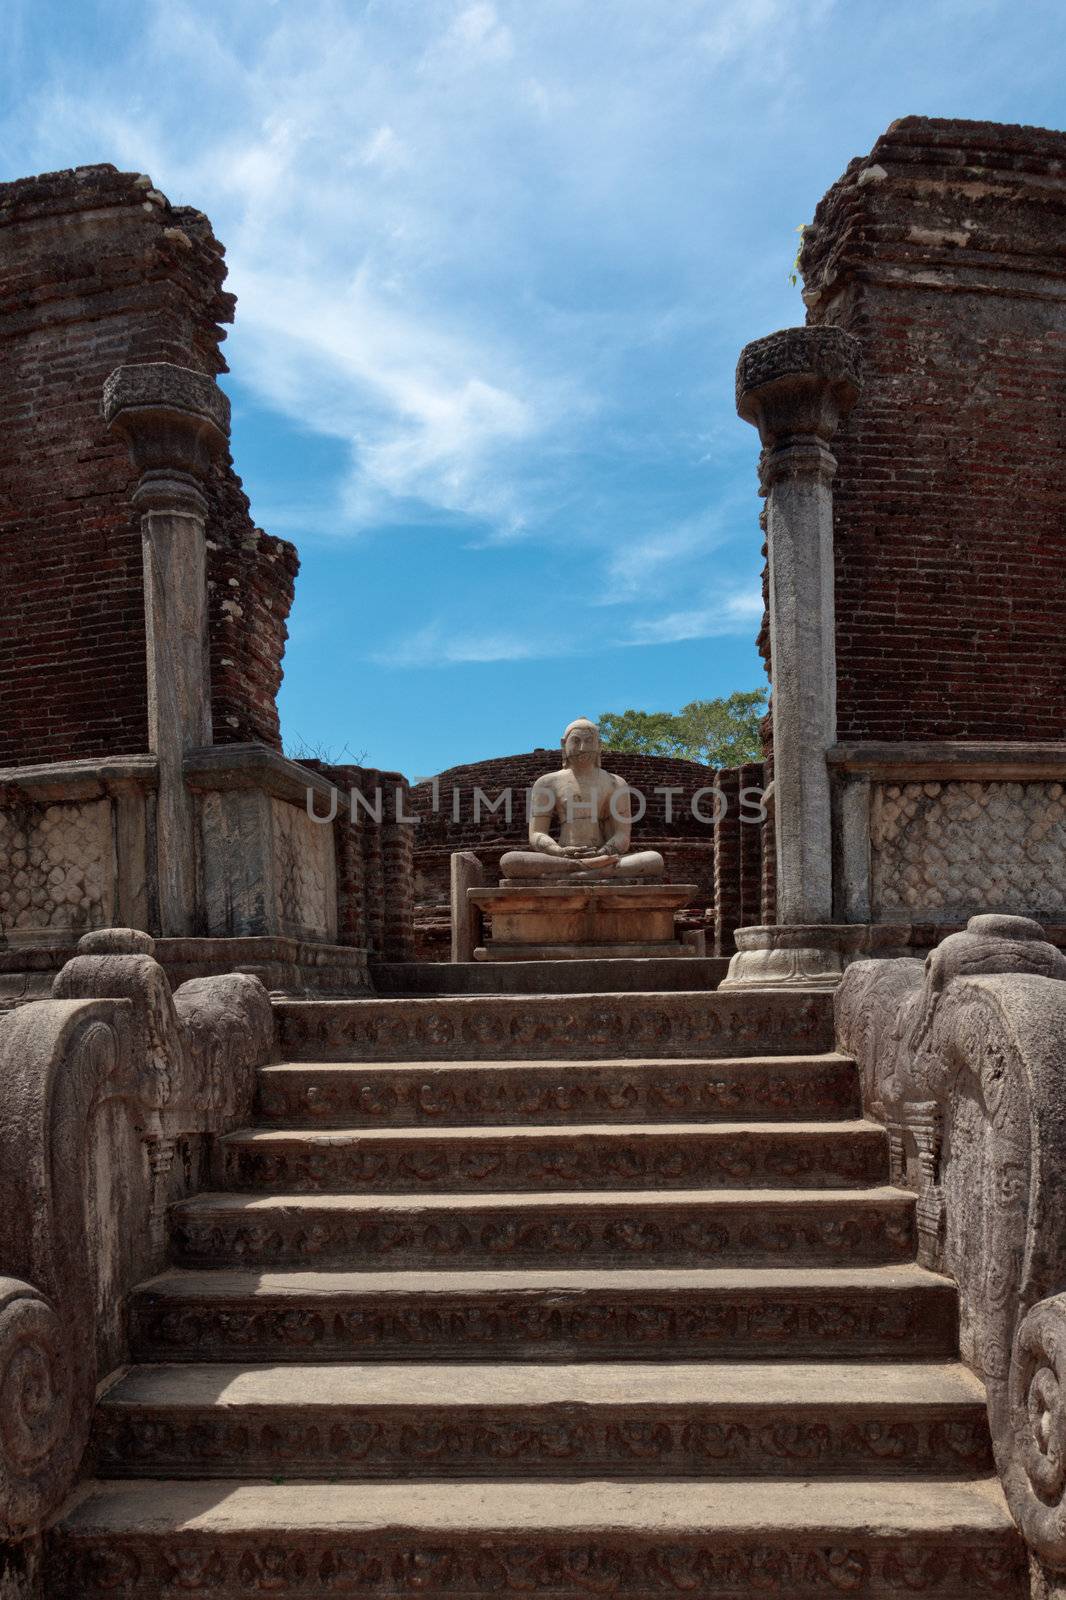 Ancient sitting Buddha image in votadage. Pollonaruwa, Sri Lanka